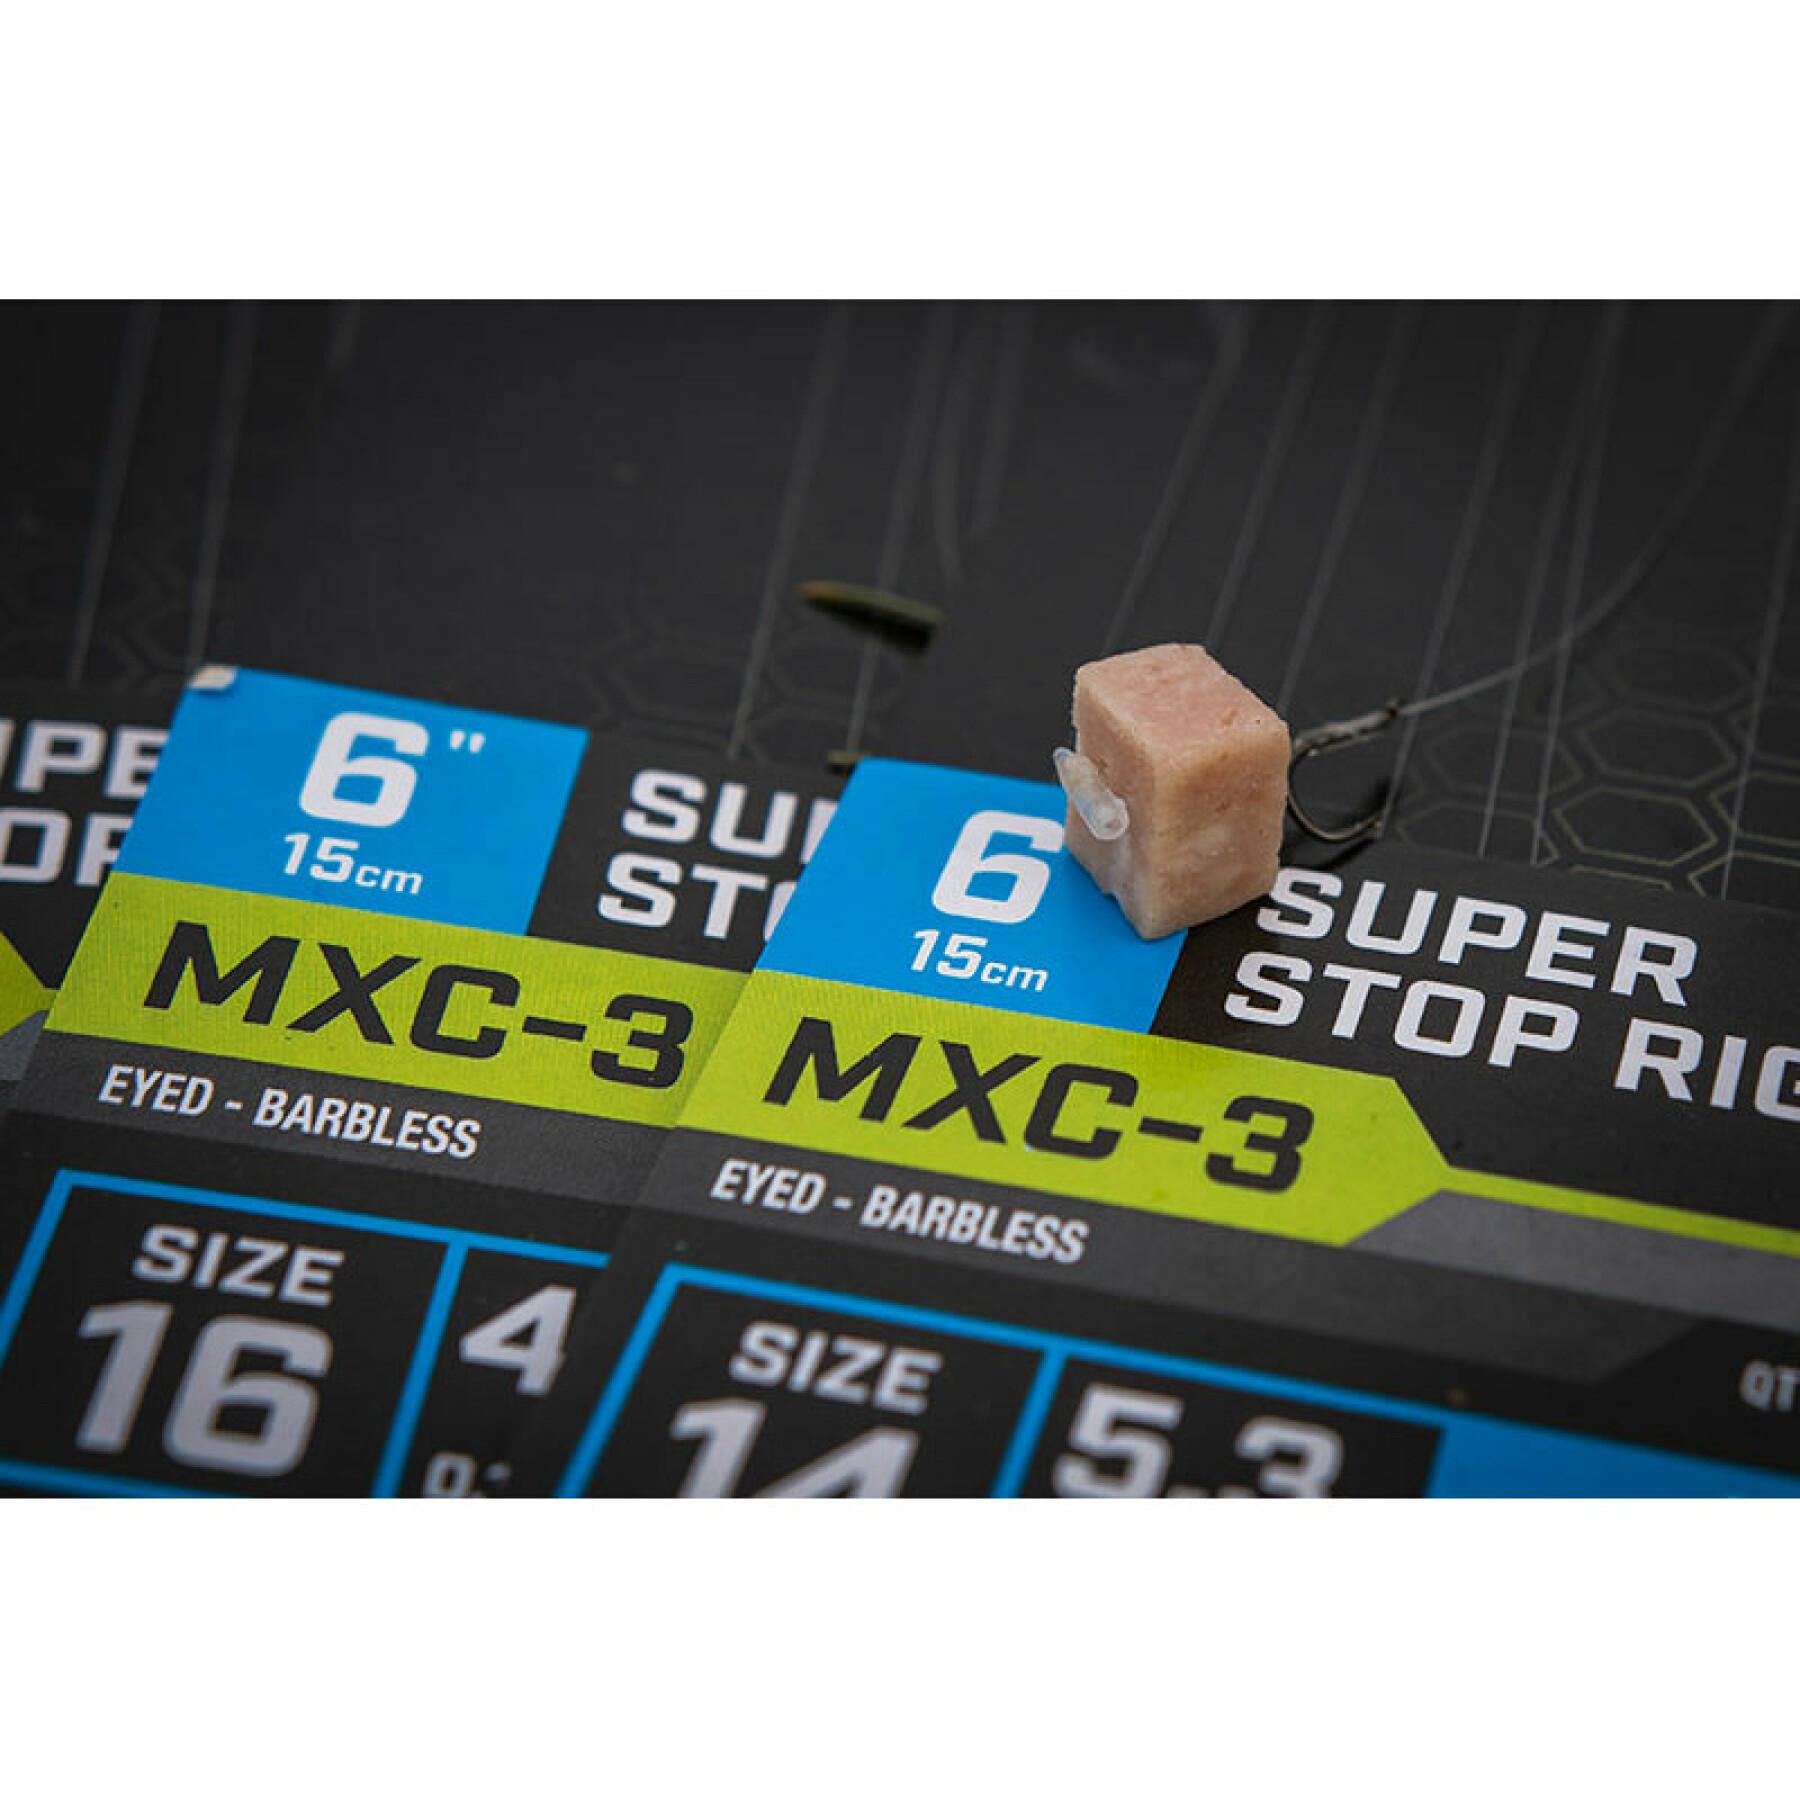 Líder sem Barbless Matrix MXC-3 Super stop 15cm x8